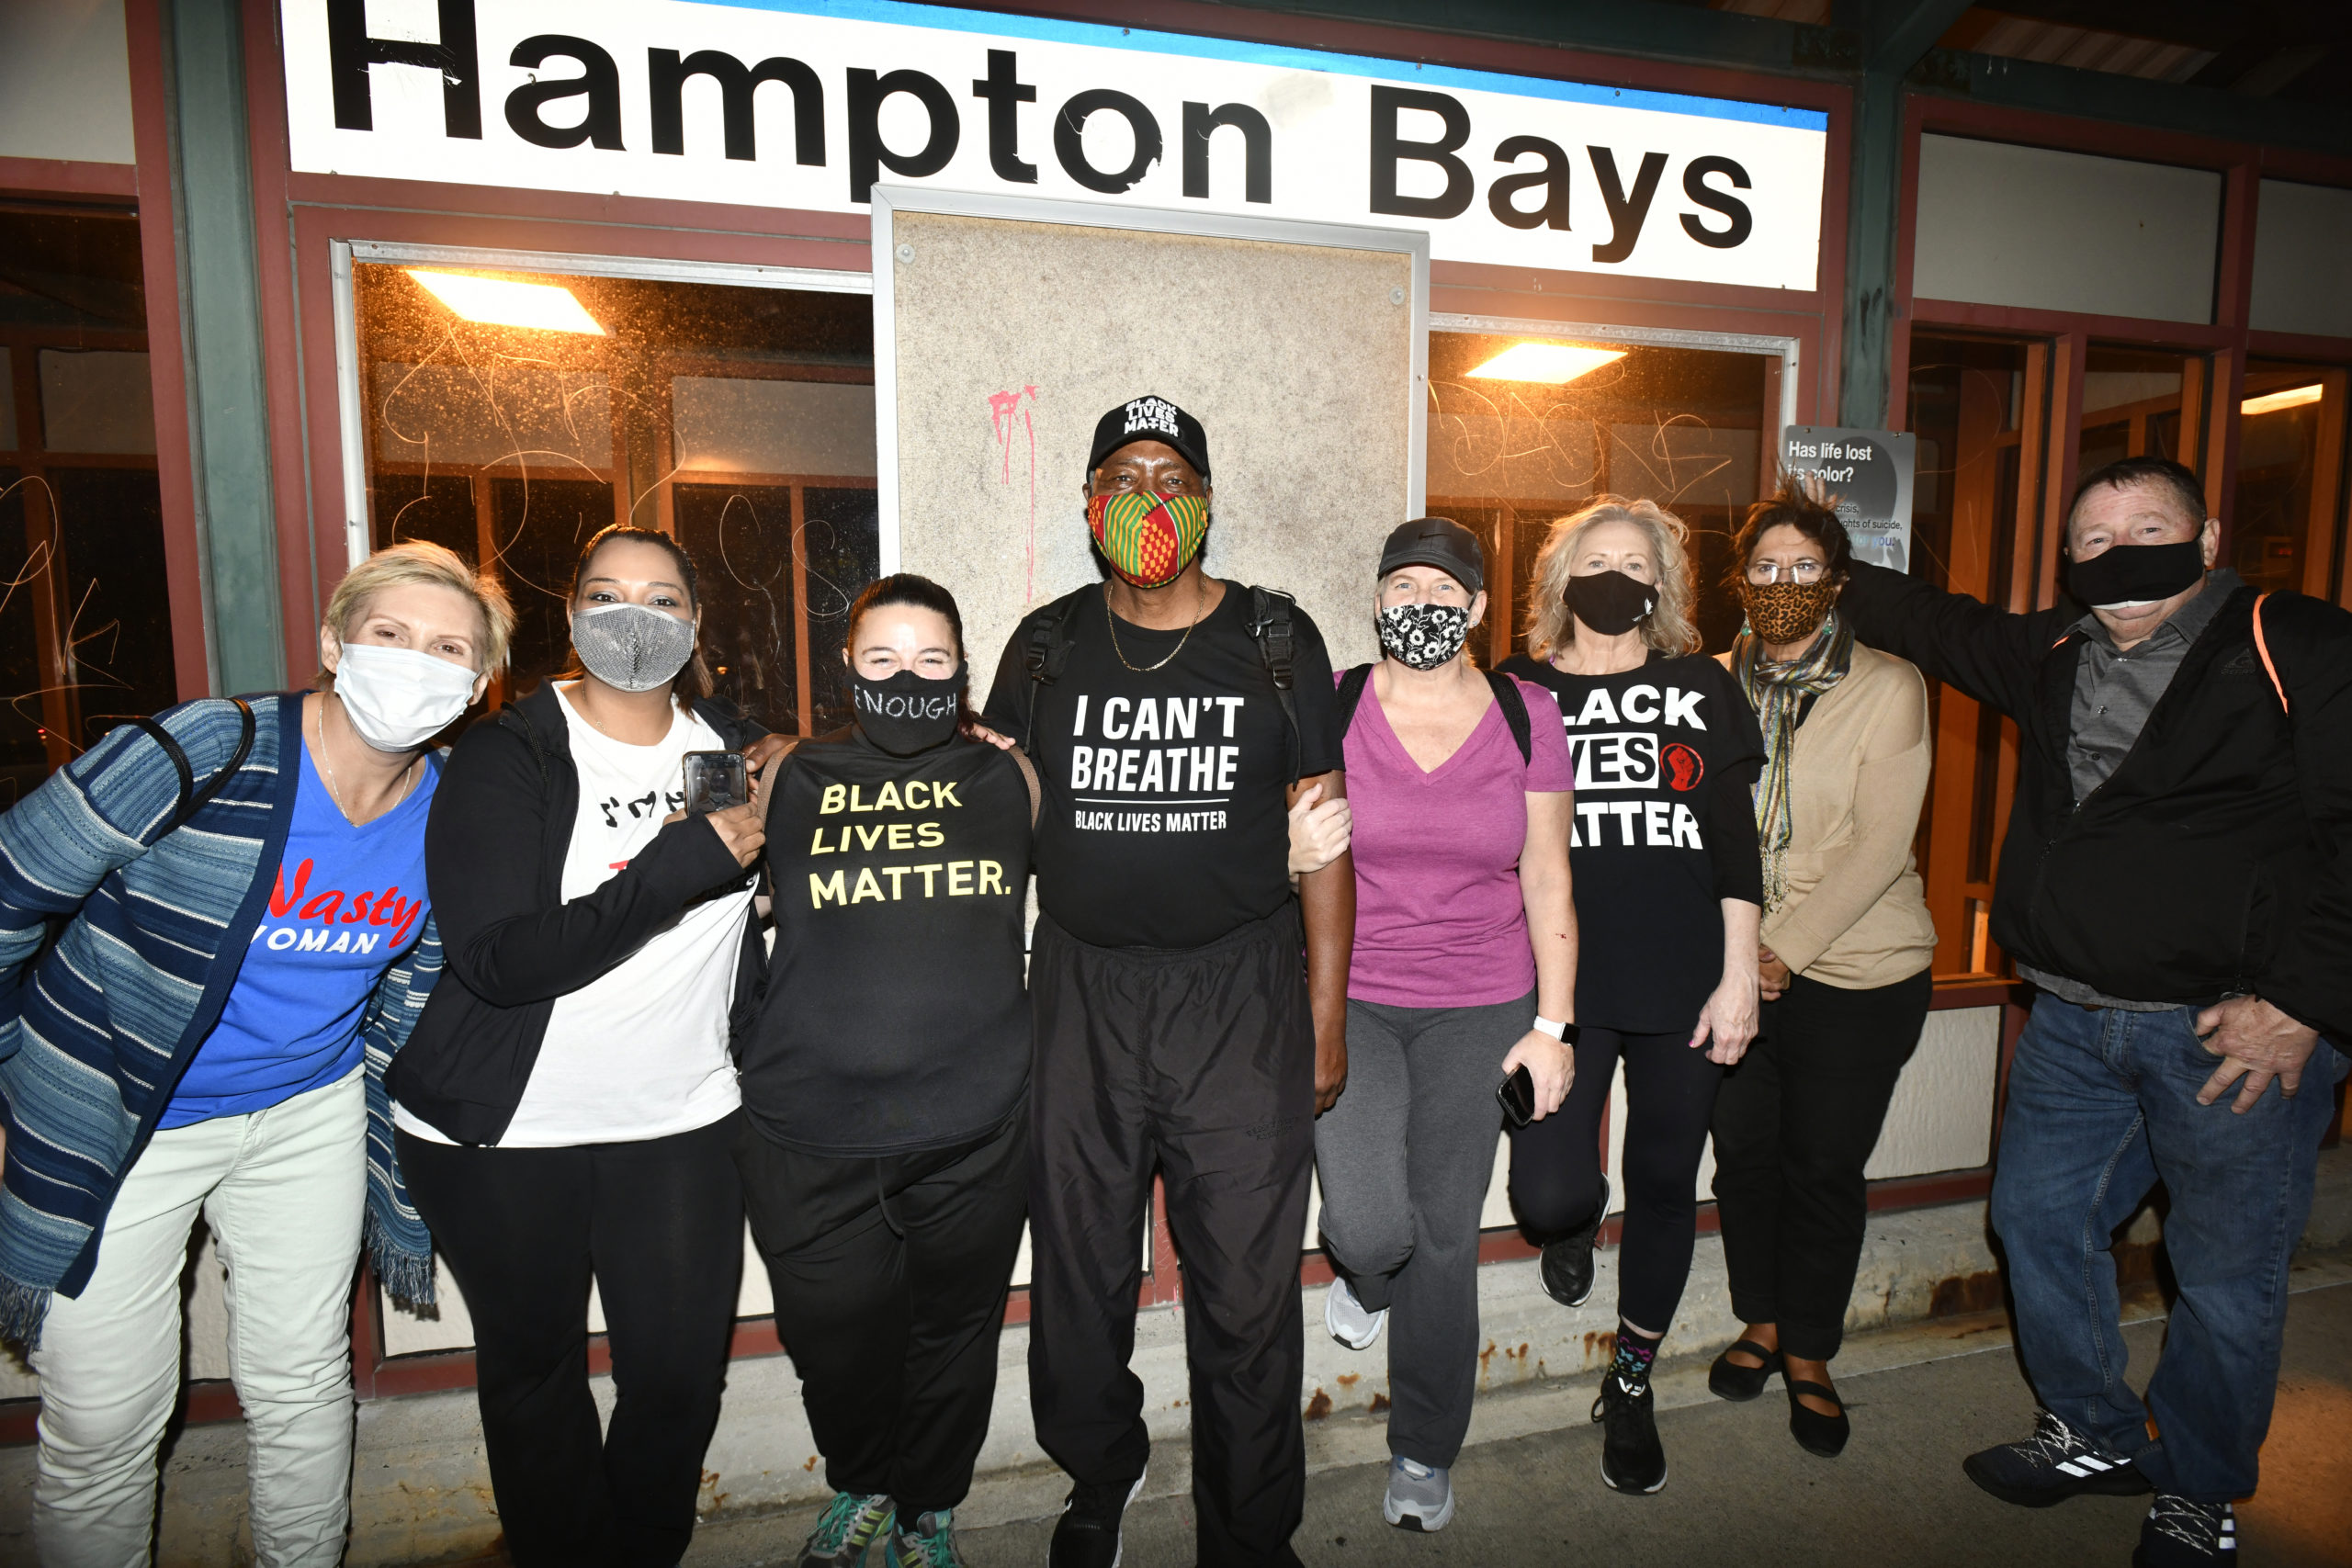 Leon Goodman and the group who walked with him on Sunday at the Hampton Bays train station.  DANA SHAW